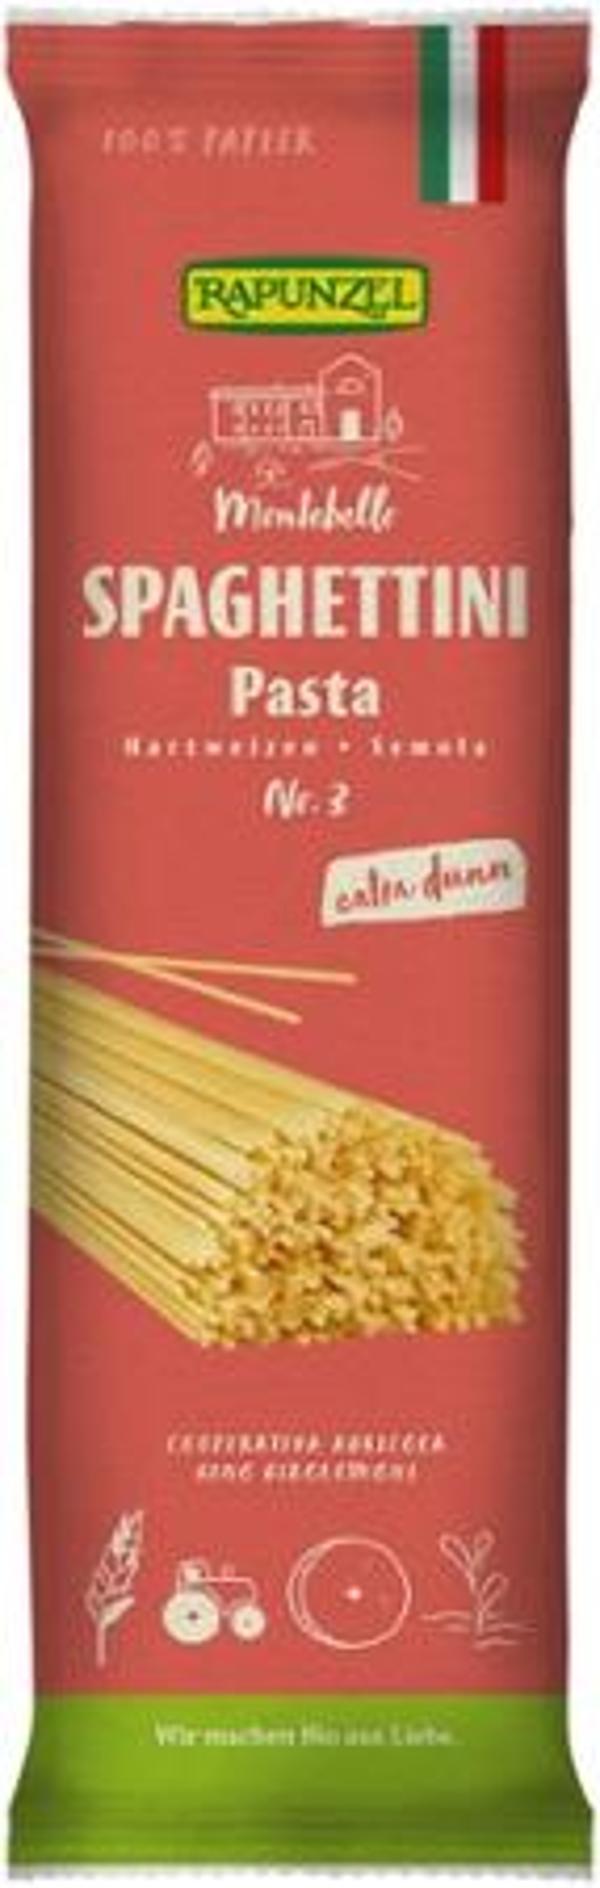 Produktfoto zu Spaghetti dünn semola No.3